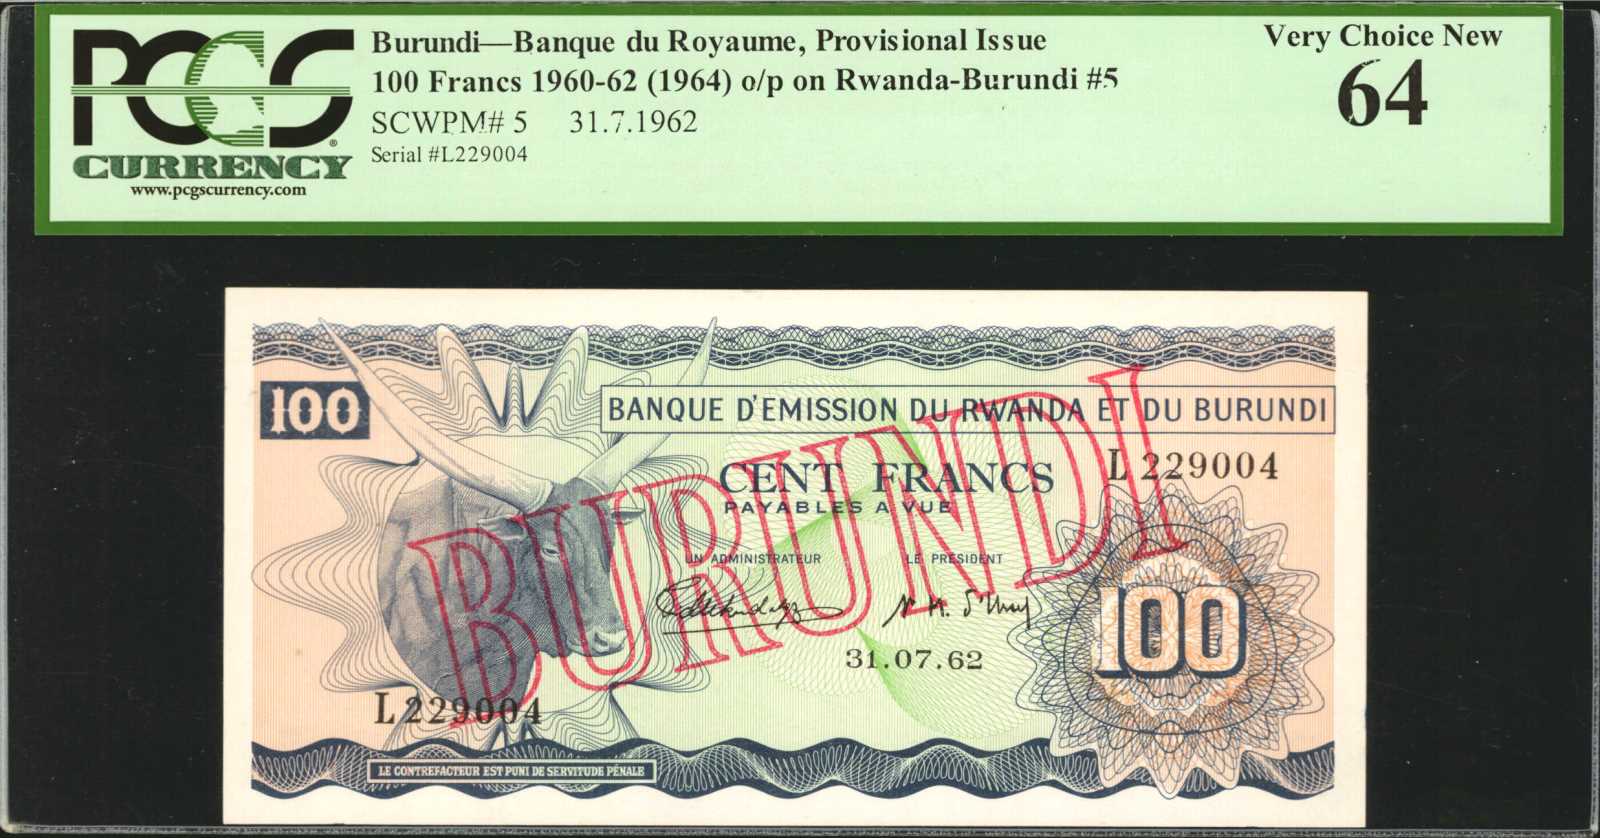 BURUNDI. Banque d'Emission du Rwanda et du Burundi. 100 Francs